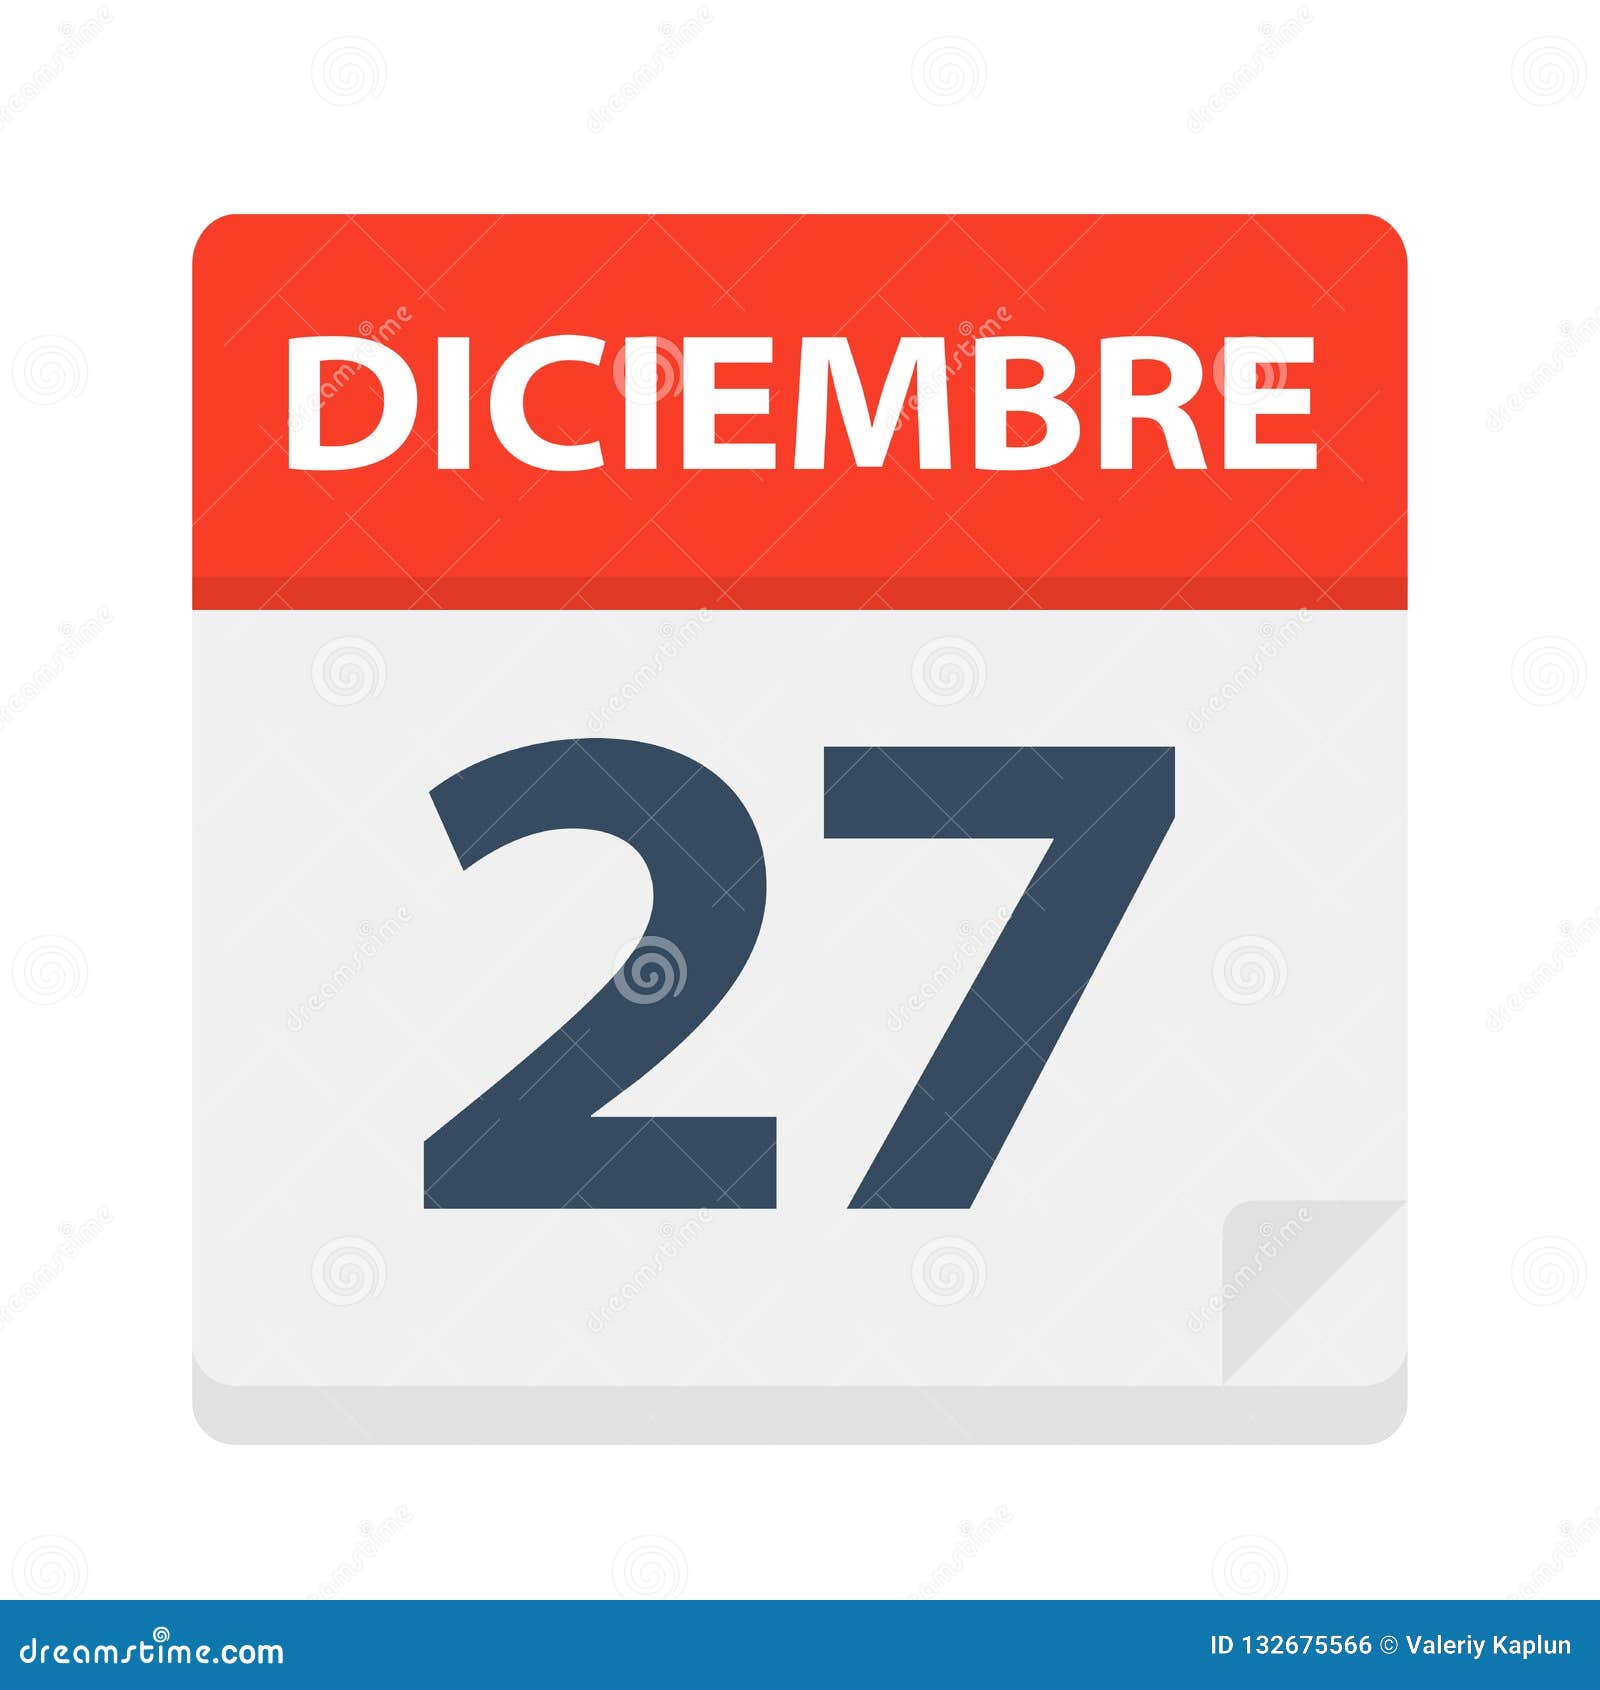 diciembre 27 - calendar icon - december 27.   of spanish calendar leaf